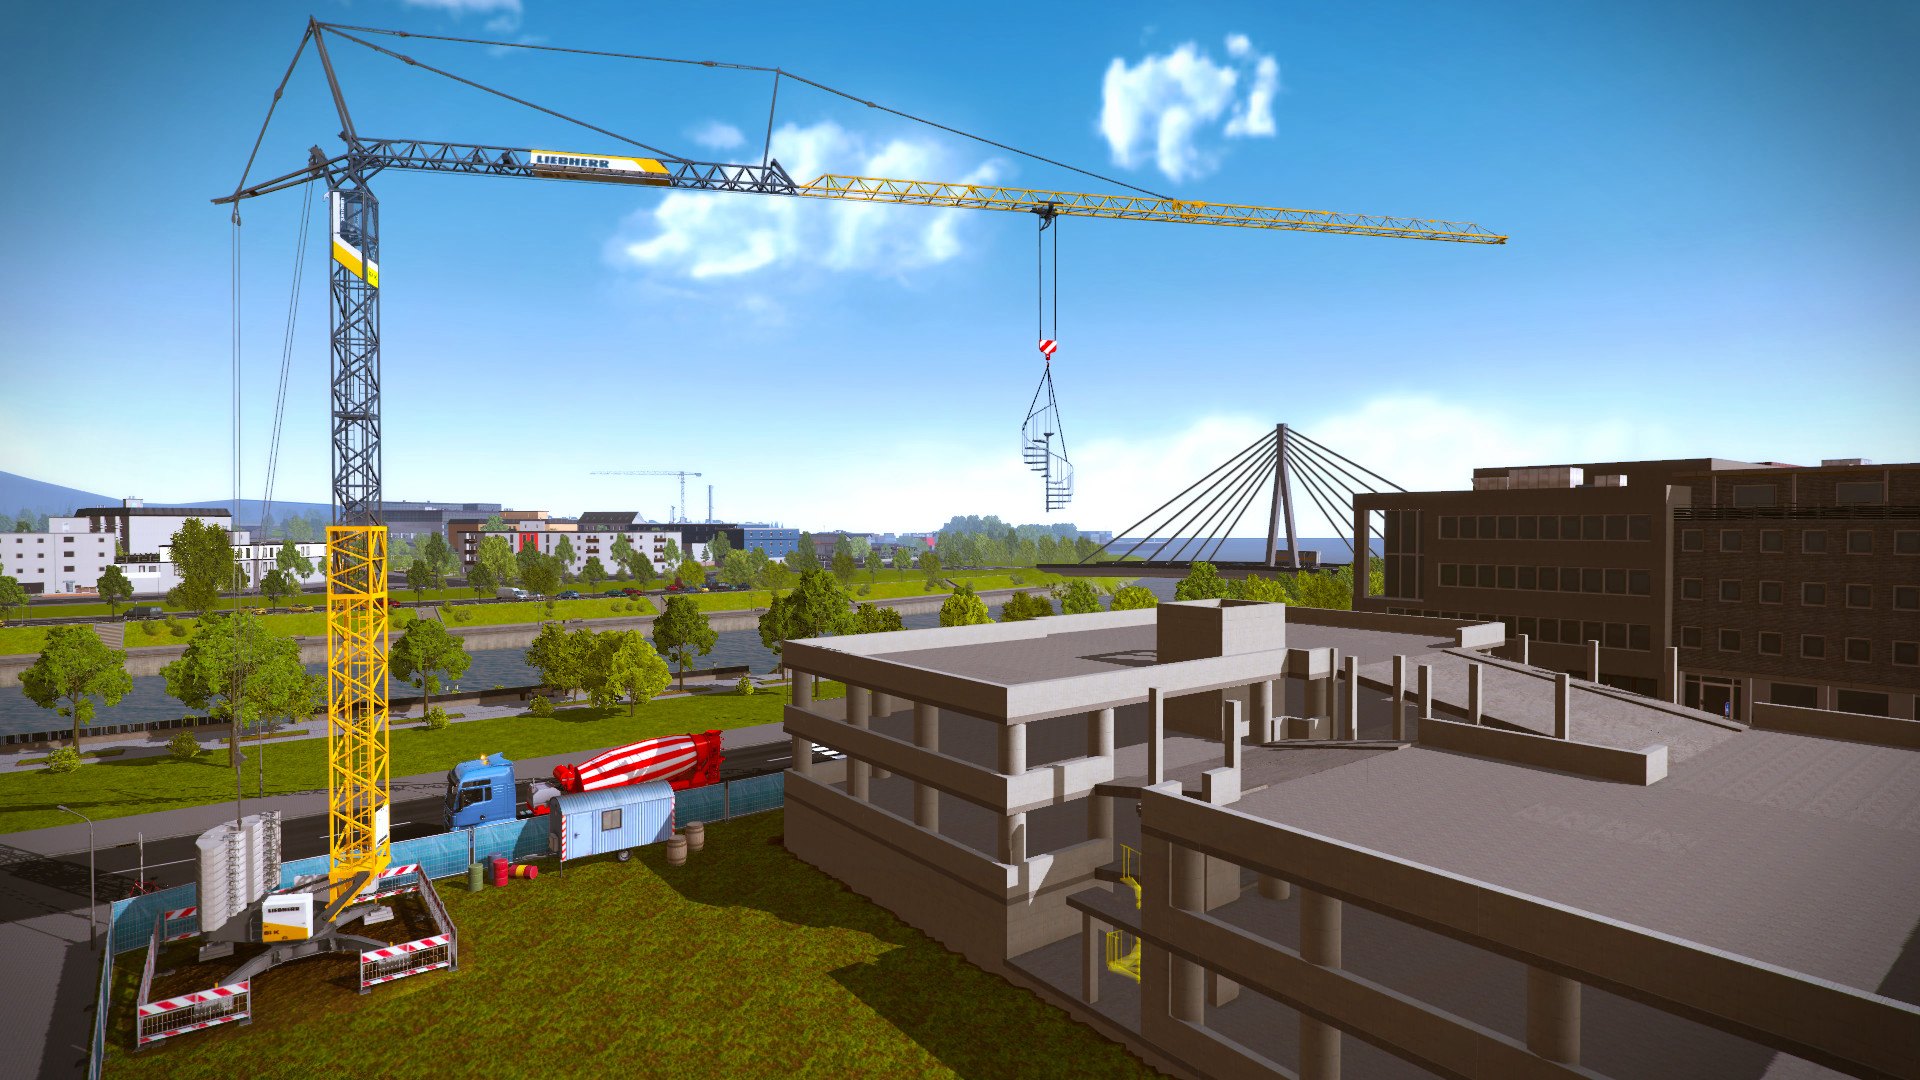 construction simulator 2015 steamunlocked